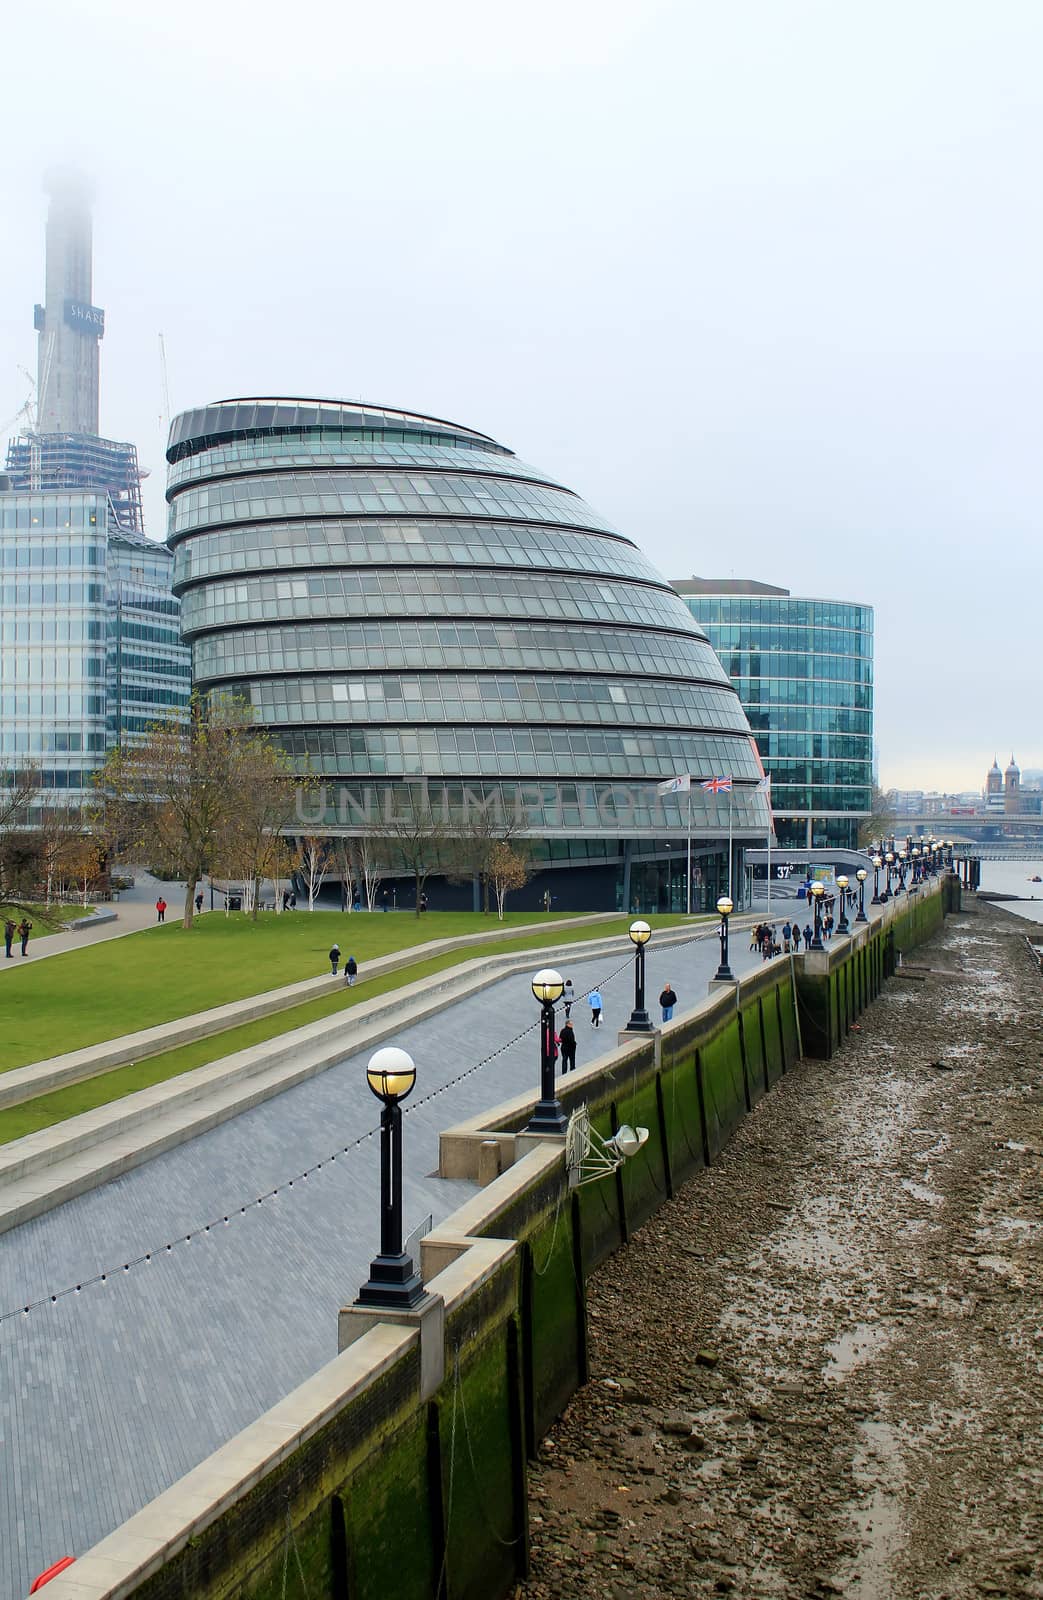 London City Hall Building by ptxgarfield